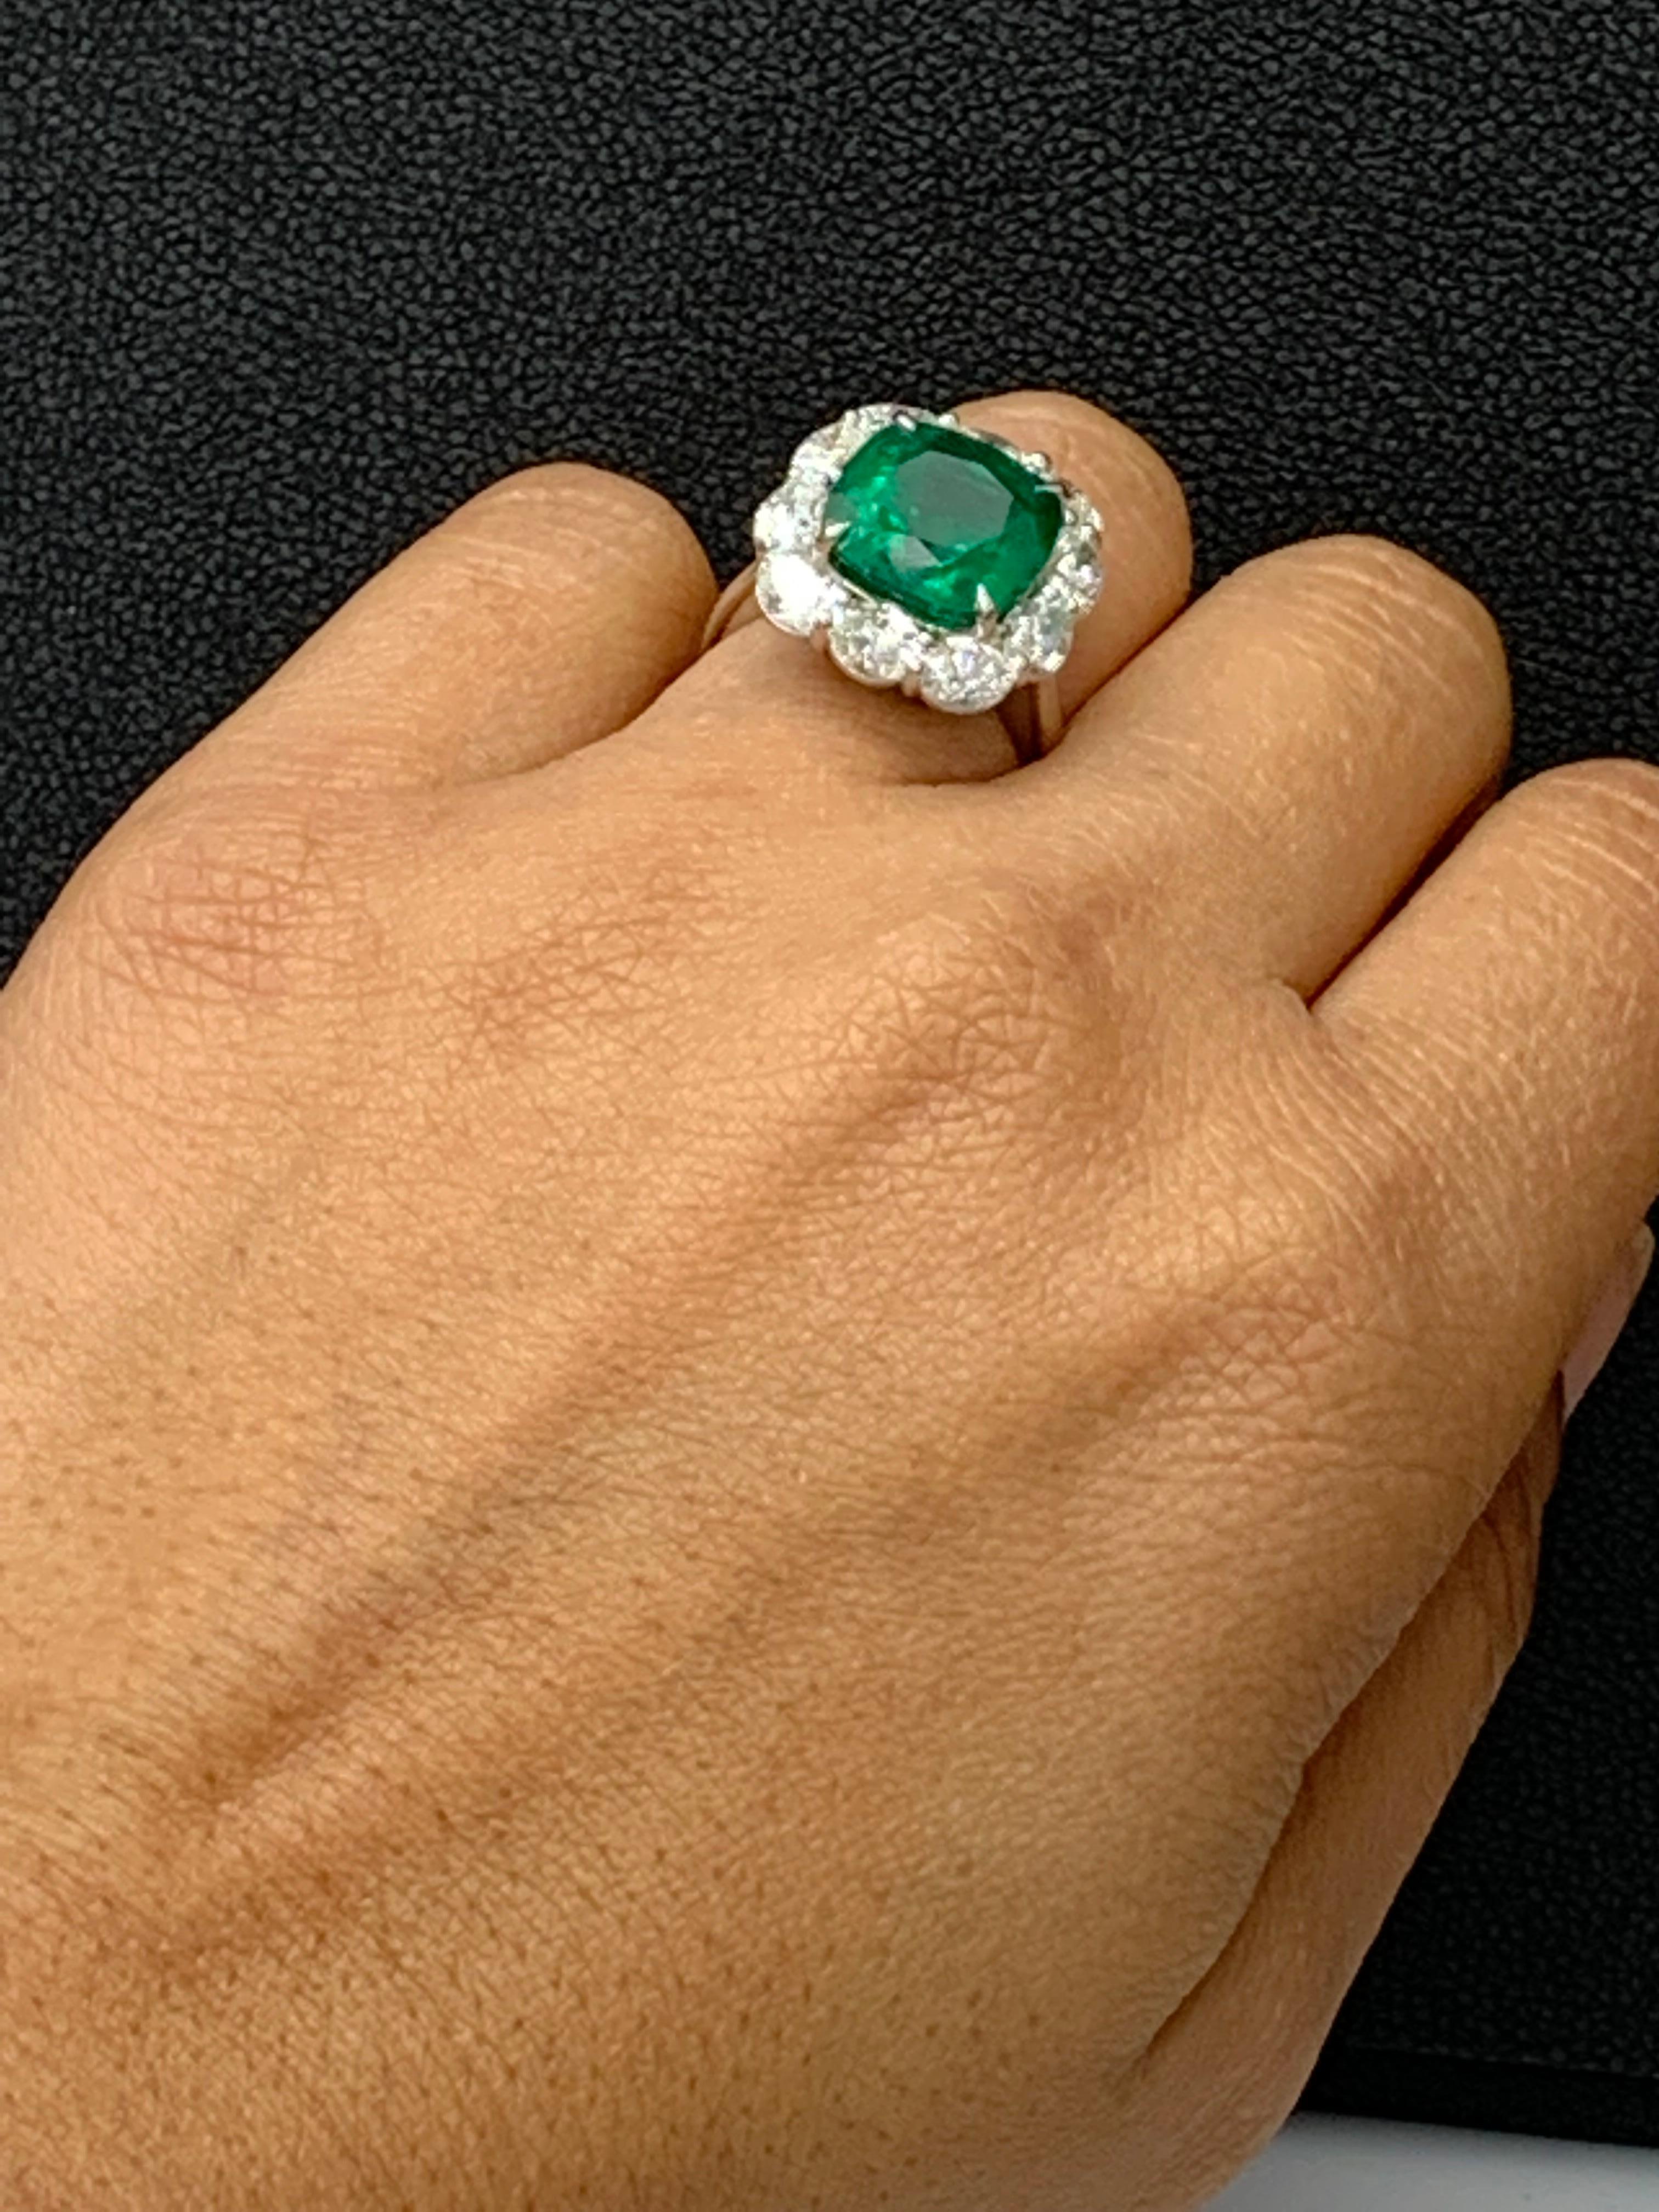 Certified 6.58 Carat Cushion Cut Emerald Diamond Ring in Platinum For Sale 6